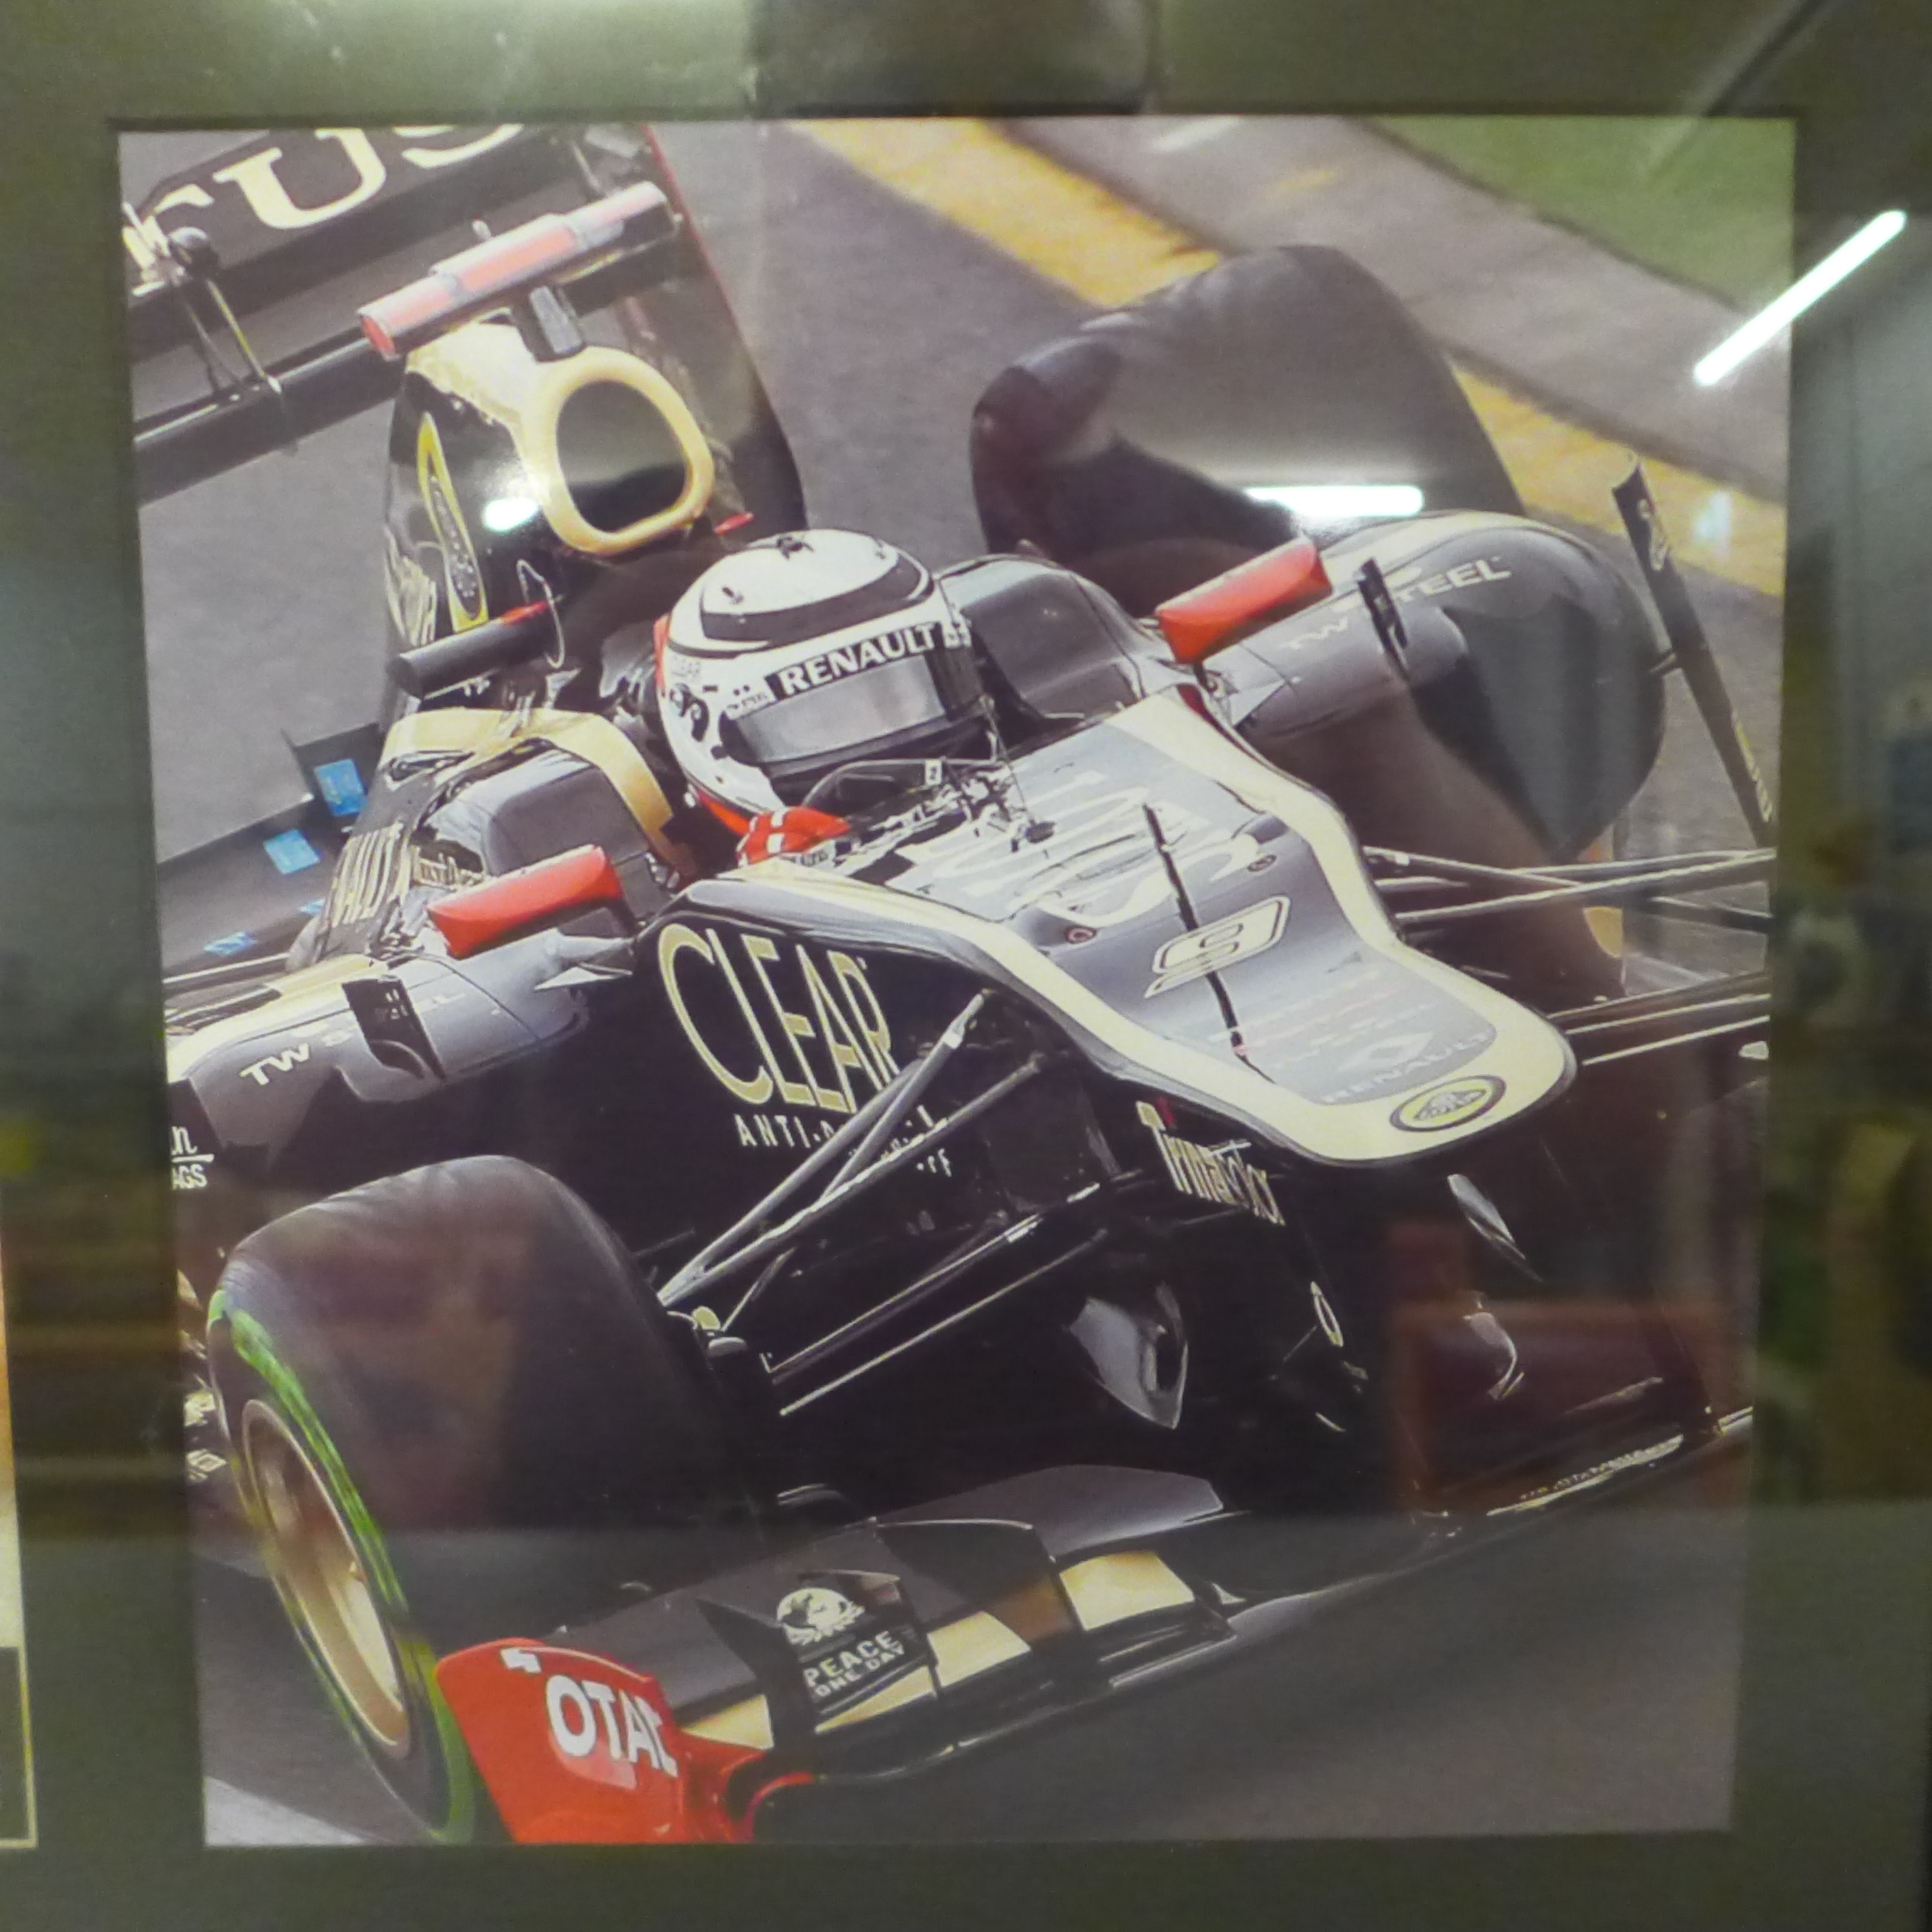 Three motor racing autograph displays, Jean-Eric Vergne, Mark Webber and Kimi Räikkönen, each with - Bild 9 aus 9